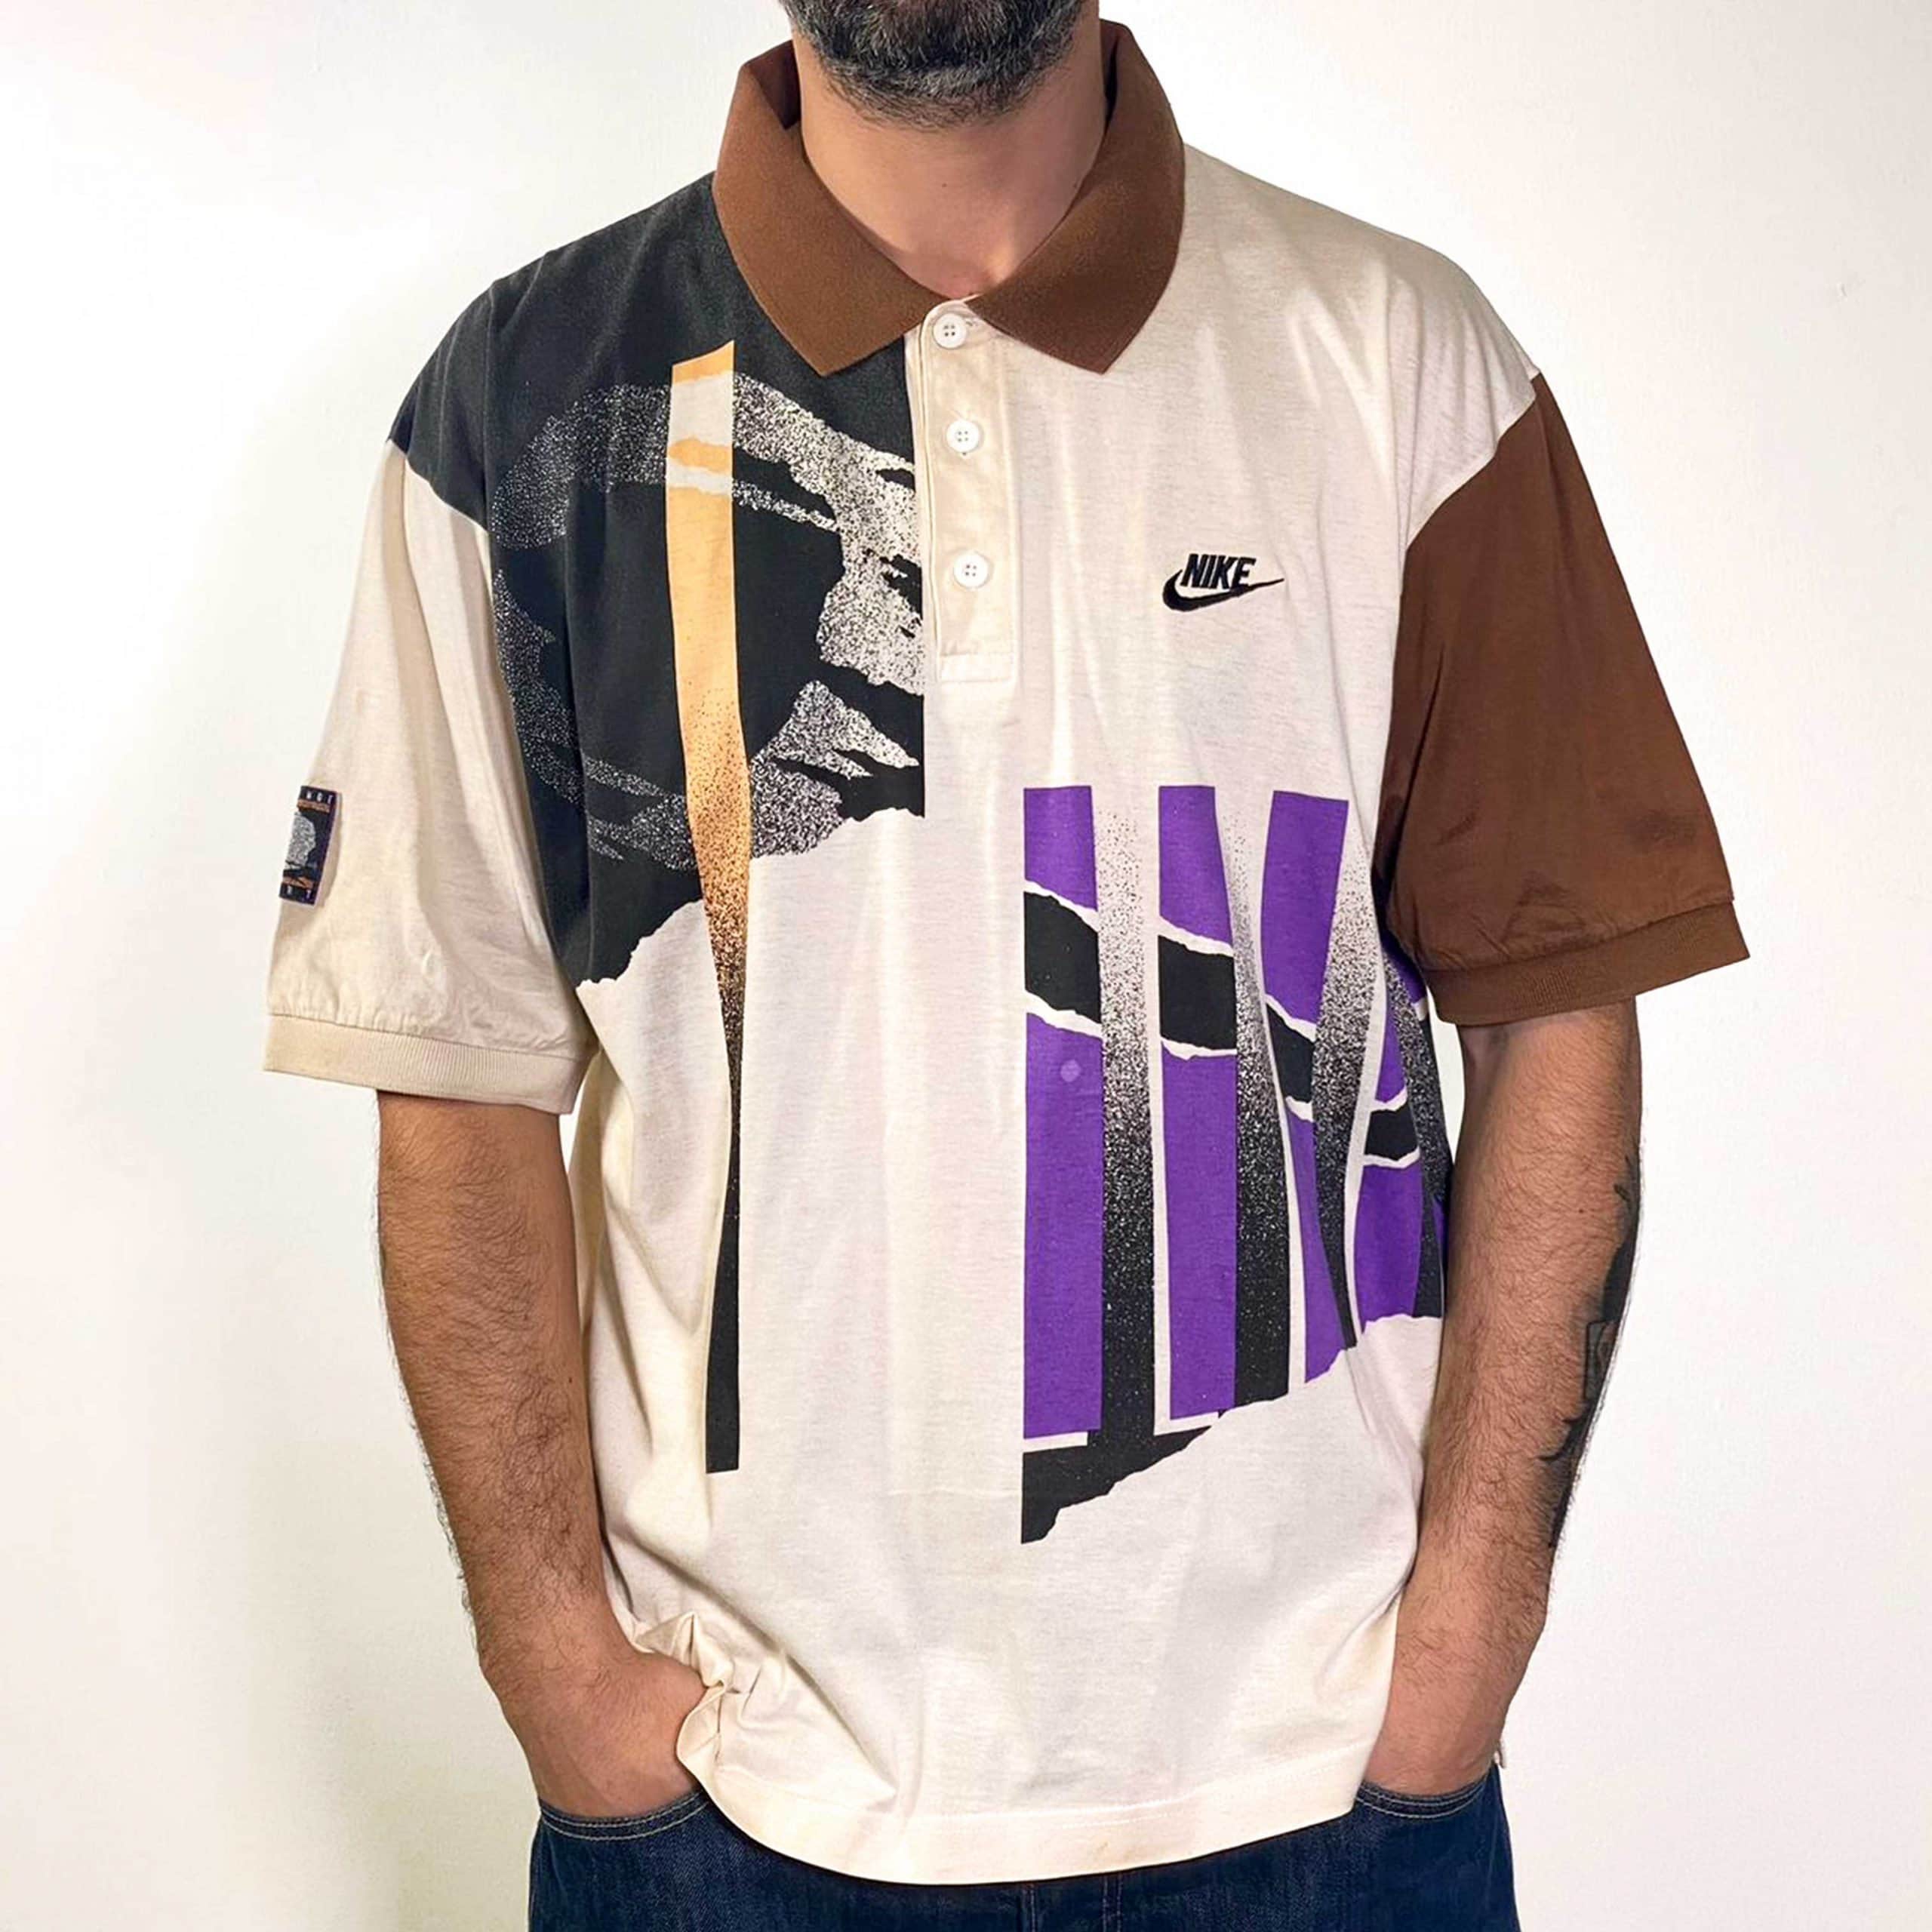 SUPER RARE Vintage 90s Polo Tennis Shirt Nike Court - Etsy Finland